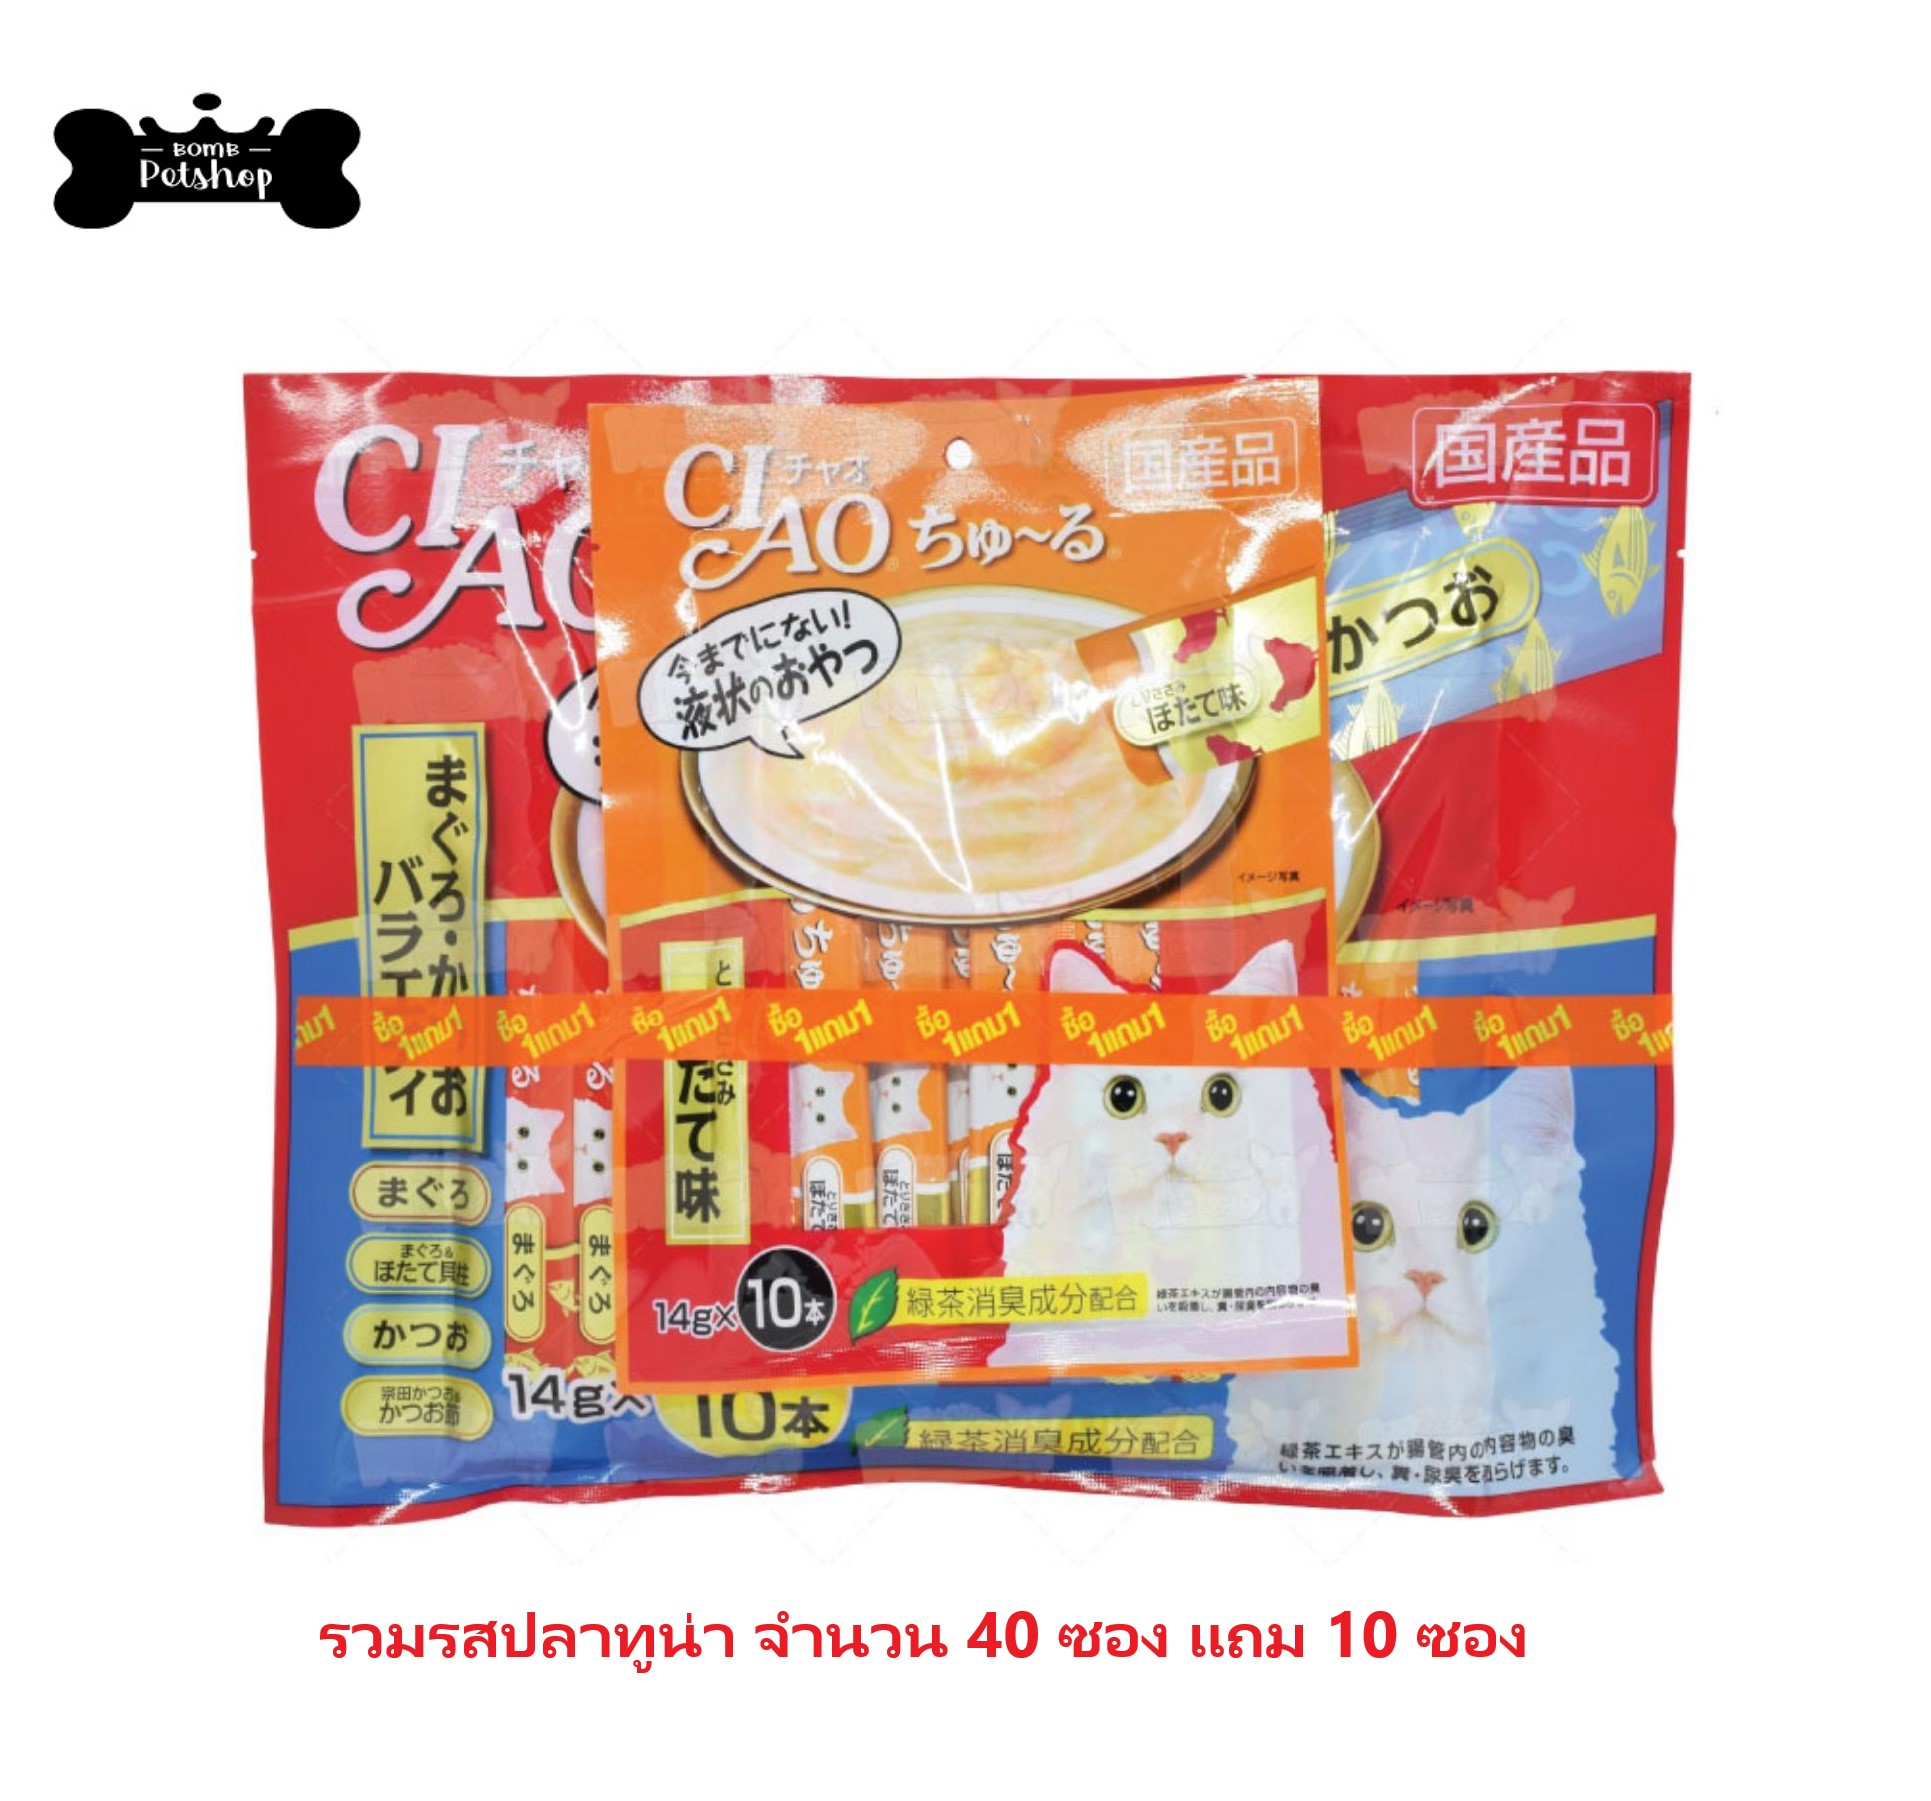 CIAO Churu Cat Snack Sc-132 เชา ขนมแมวเลีย รวมรสปลาทูน่า คละรส บรรจุ 40 ซอง แถมฟรี 10 ซอง